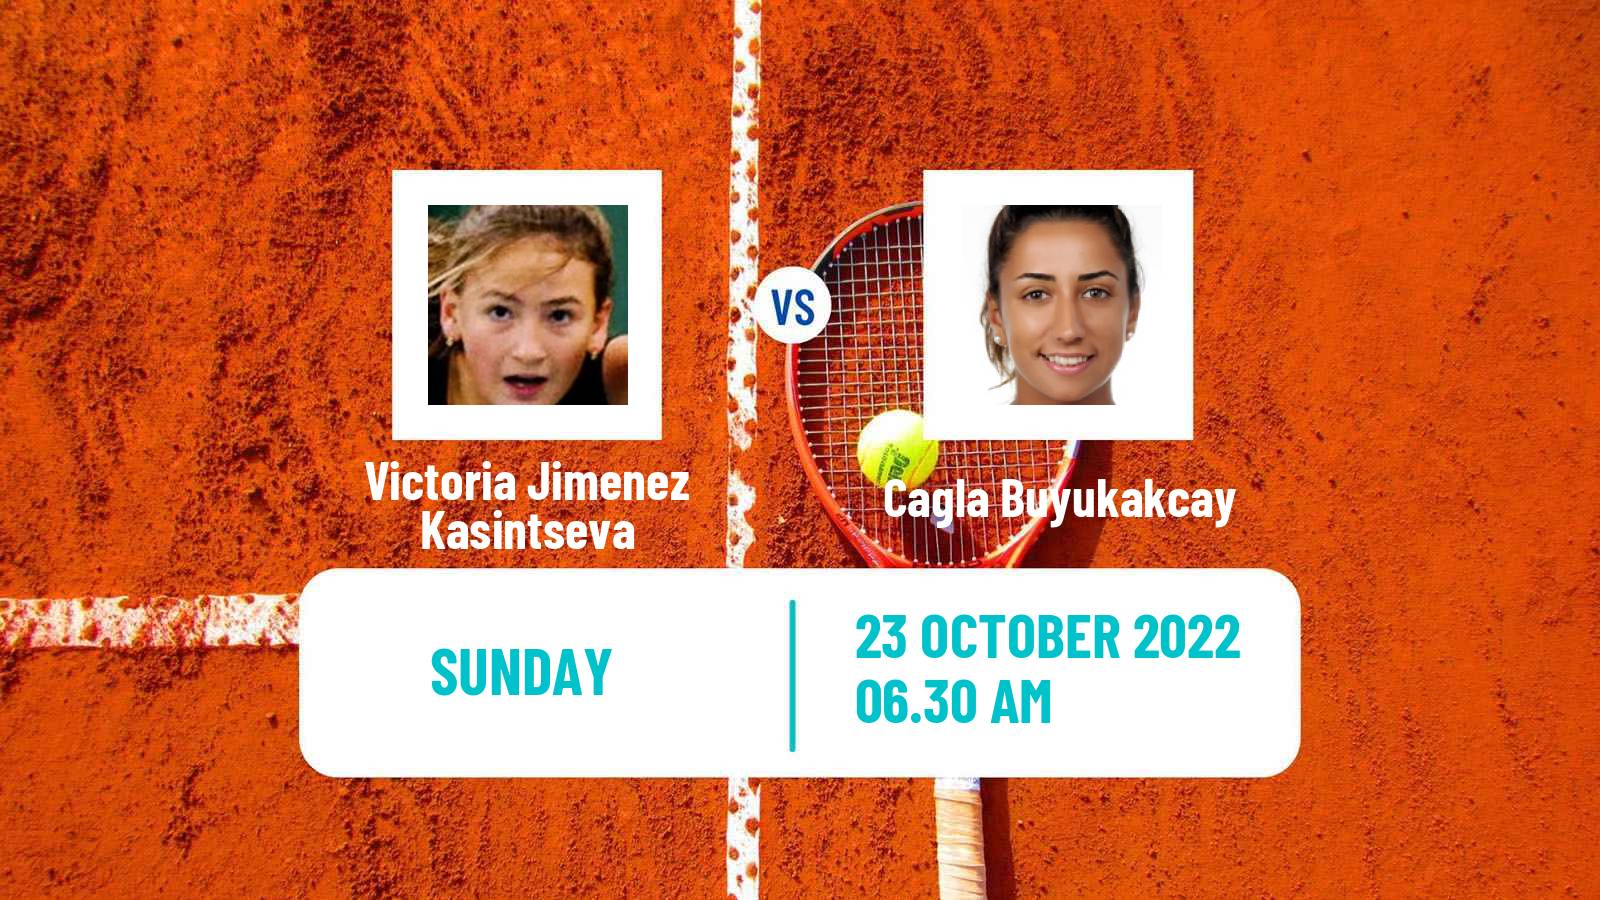 Tennis ITF Tournaments Victoria Jimenez Kasintseva - Cagla Buyukakcay